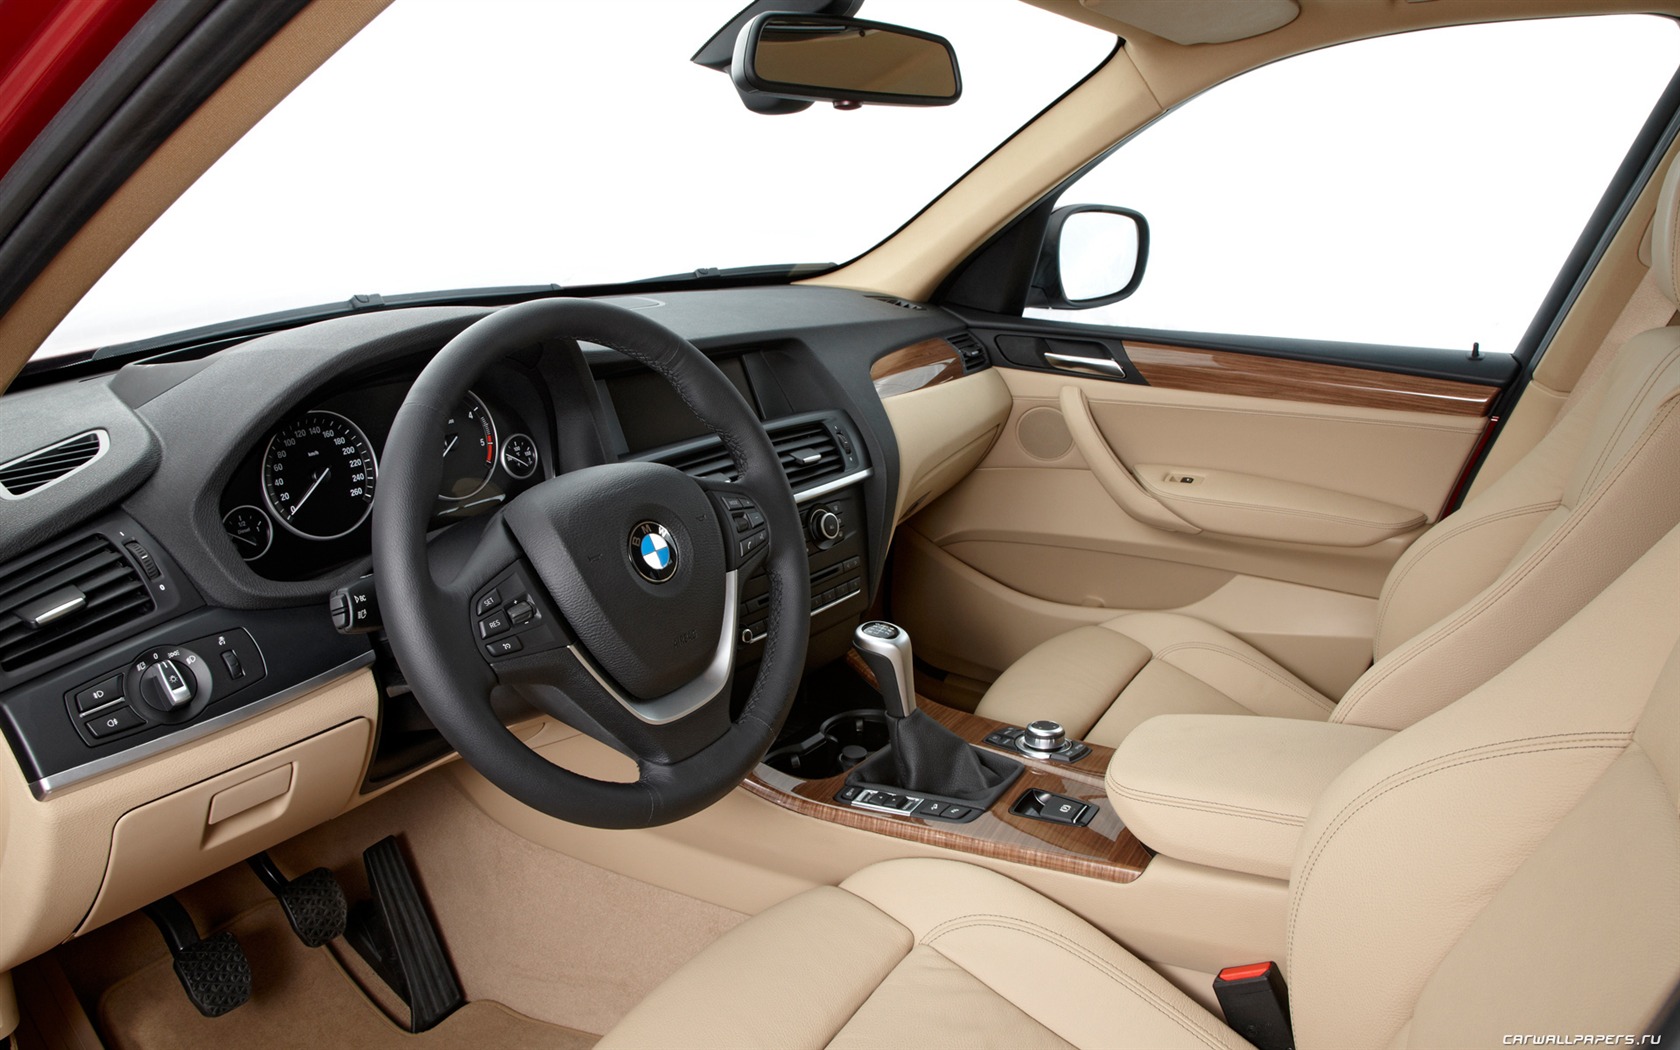 BMW X3 xDrive20d - 2010 寶馬(一) #40 - 1680x1050